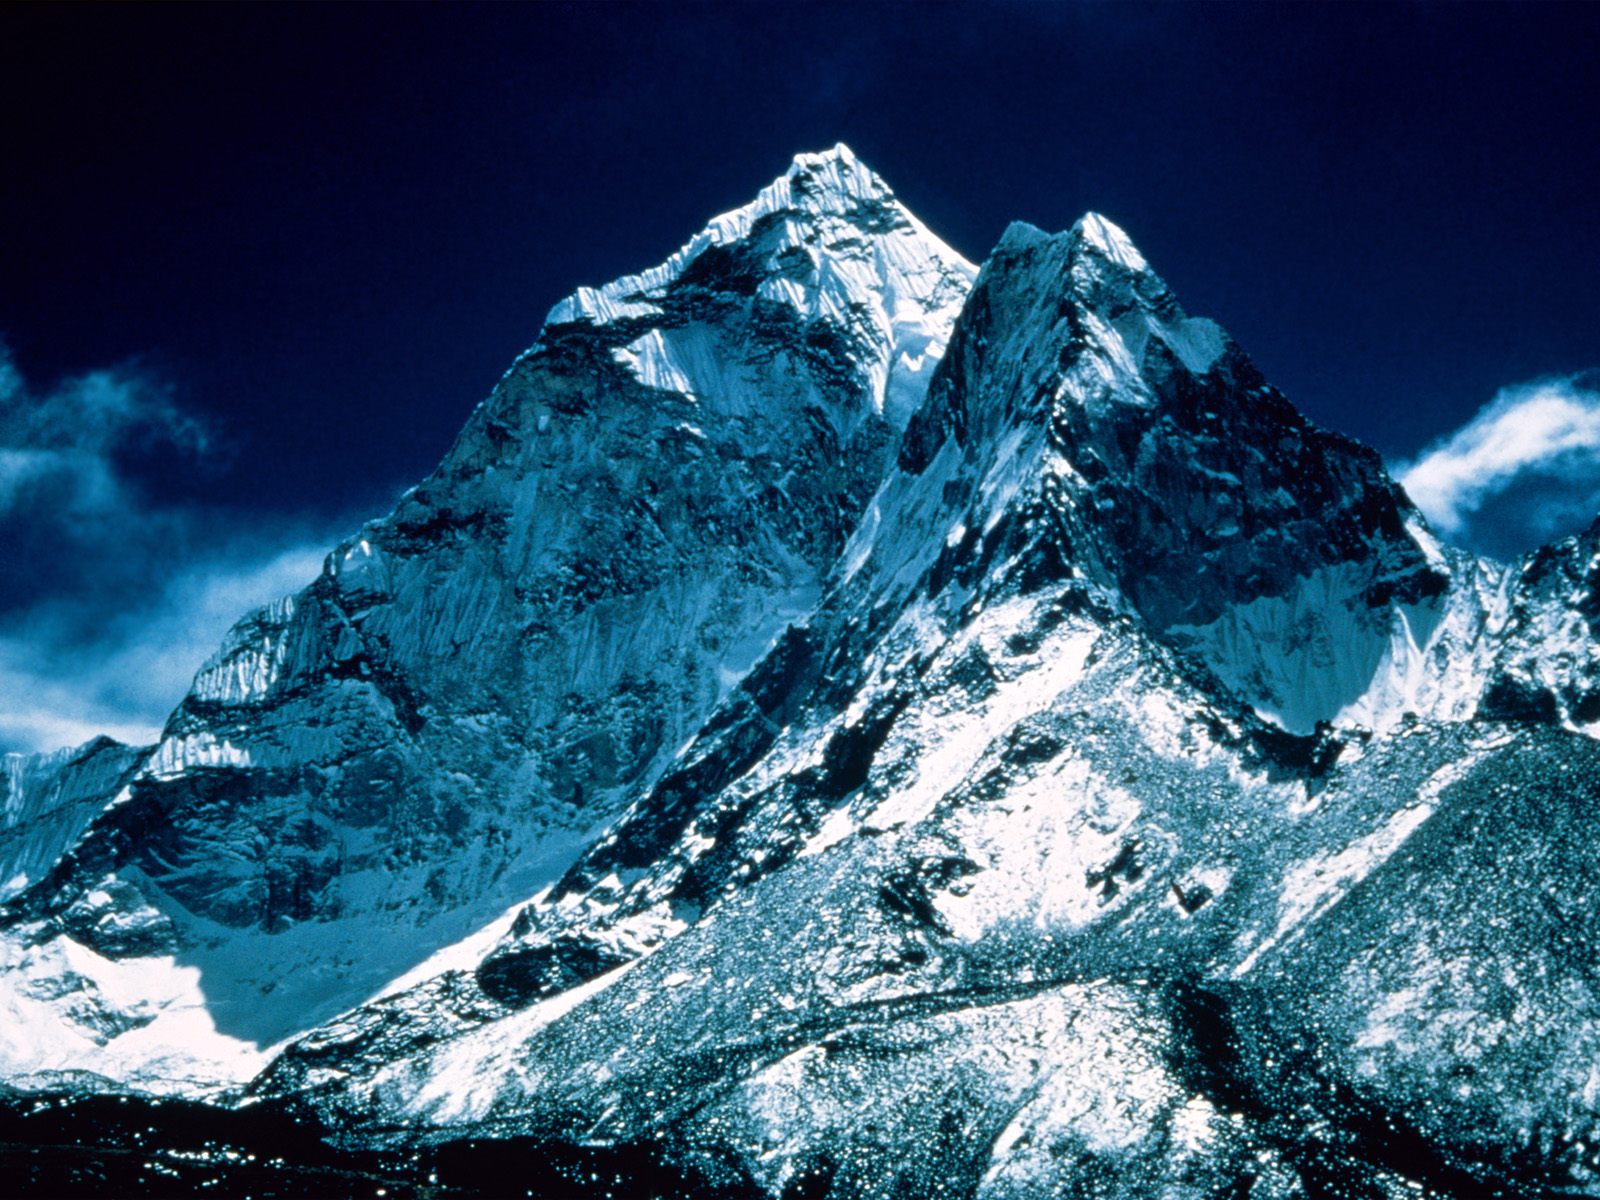 Mount Everest Desktop Wallpaper Wallpapersafari